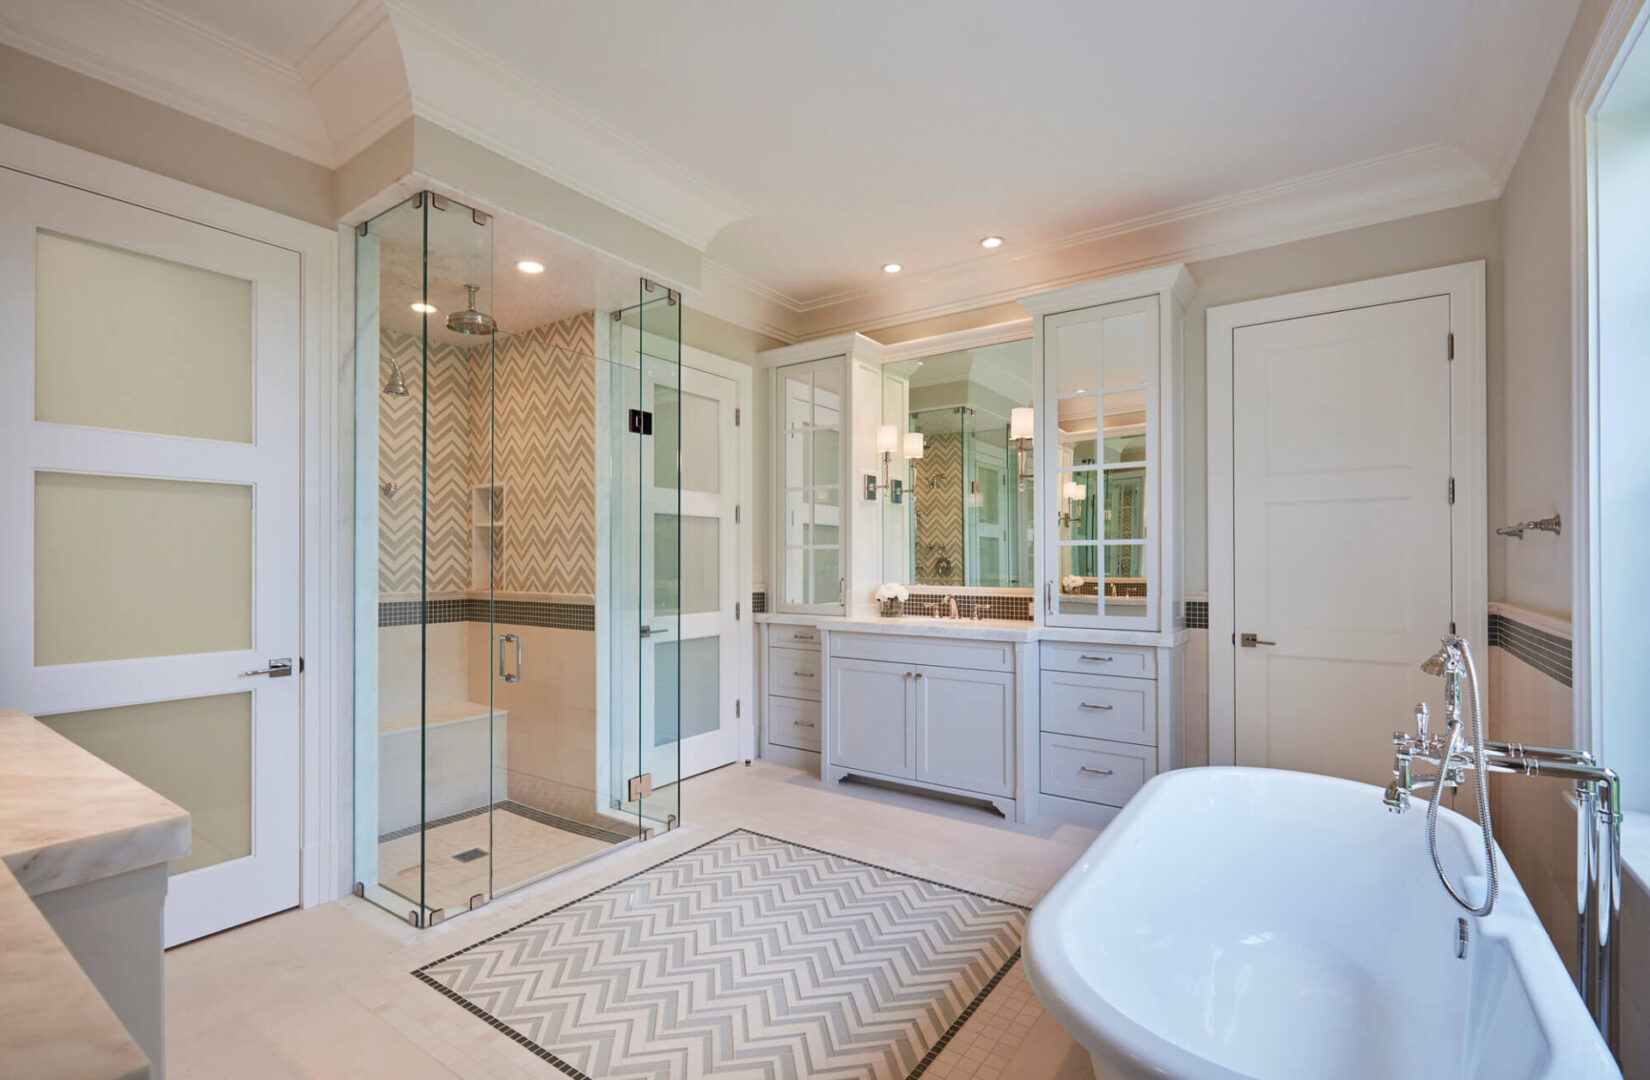 A bathroom with a large mirror and a bath tub.